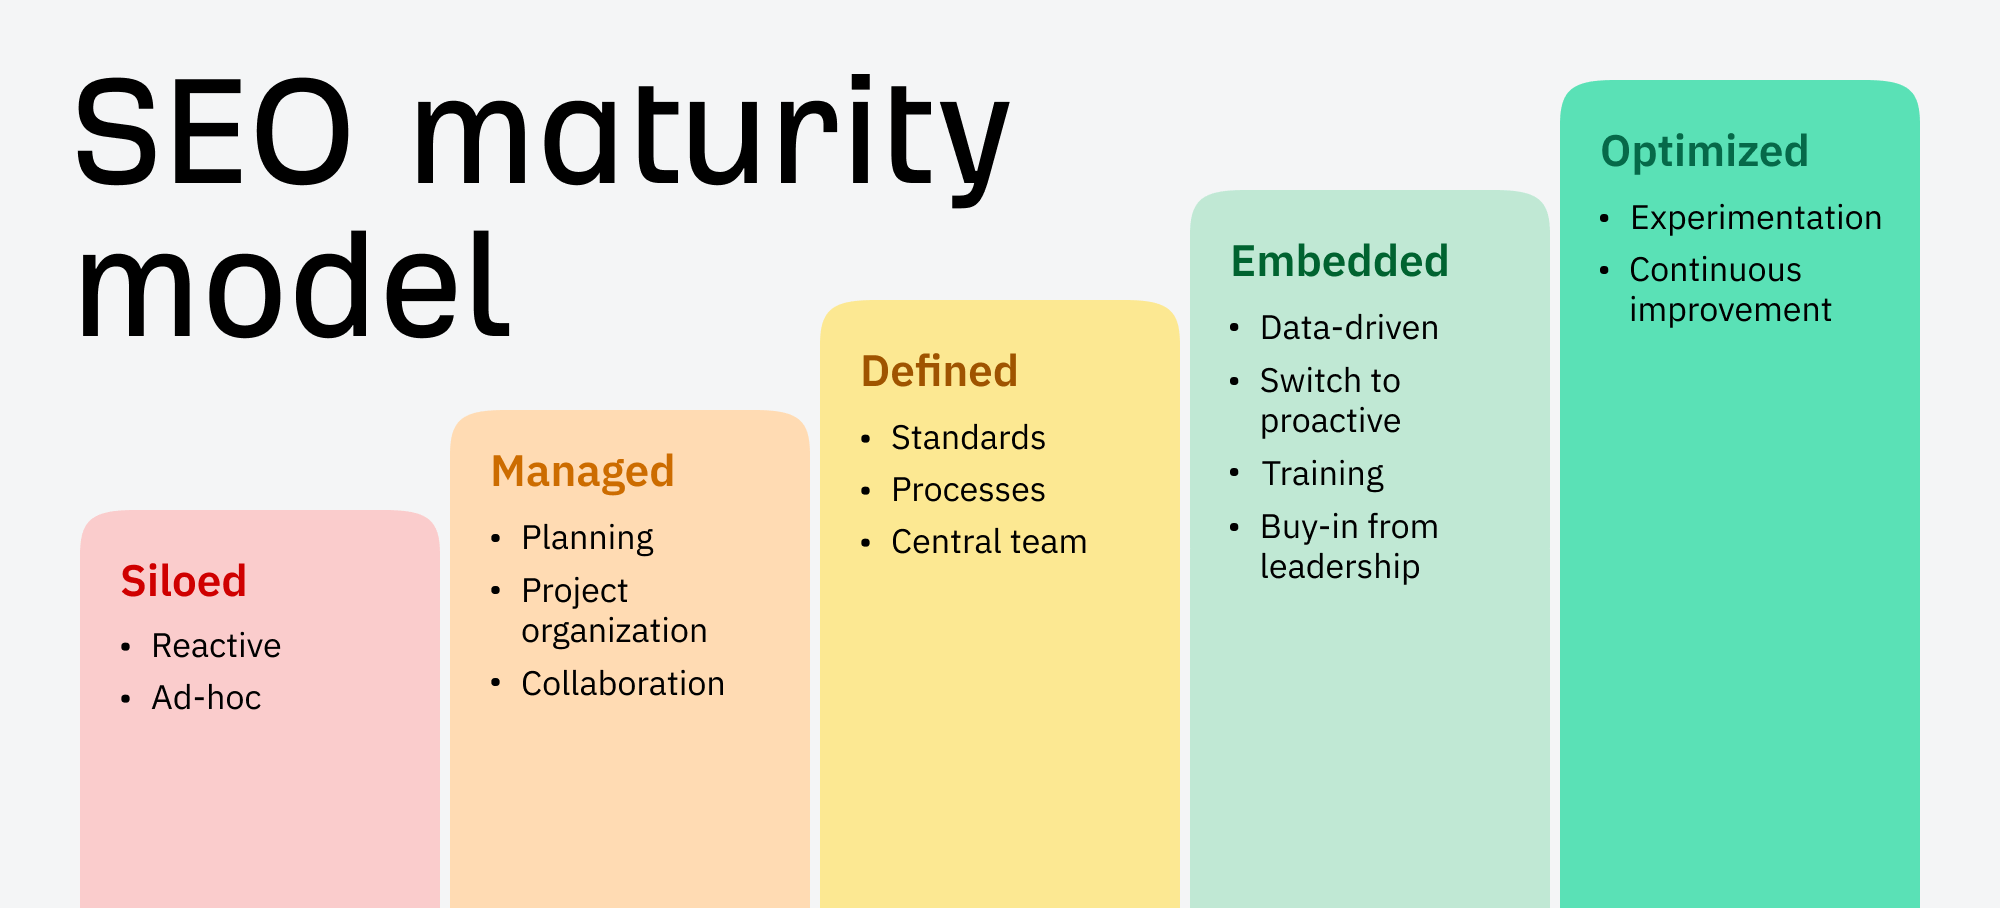 enterprise-seo-maturity-model Enterprise Sites Are Where Technical SEO Shines